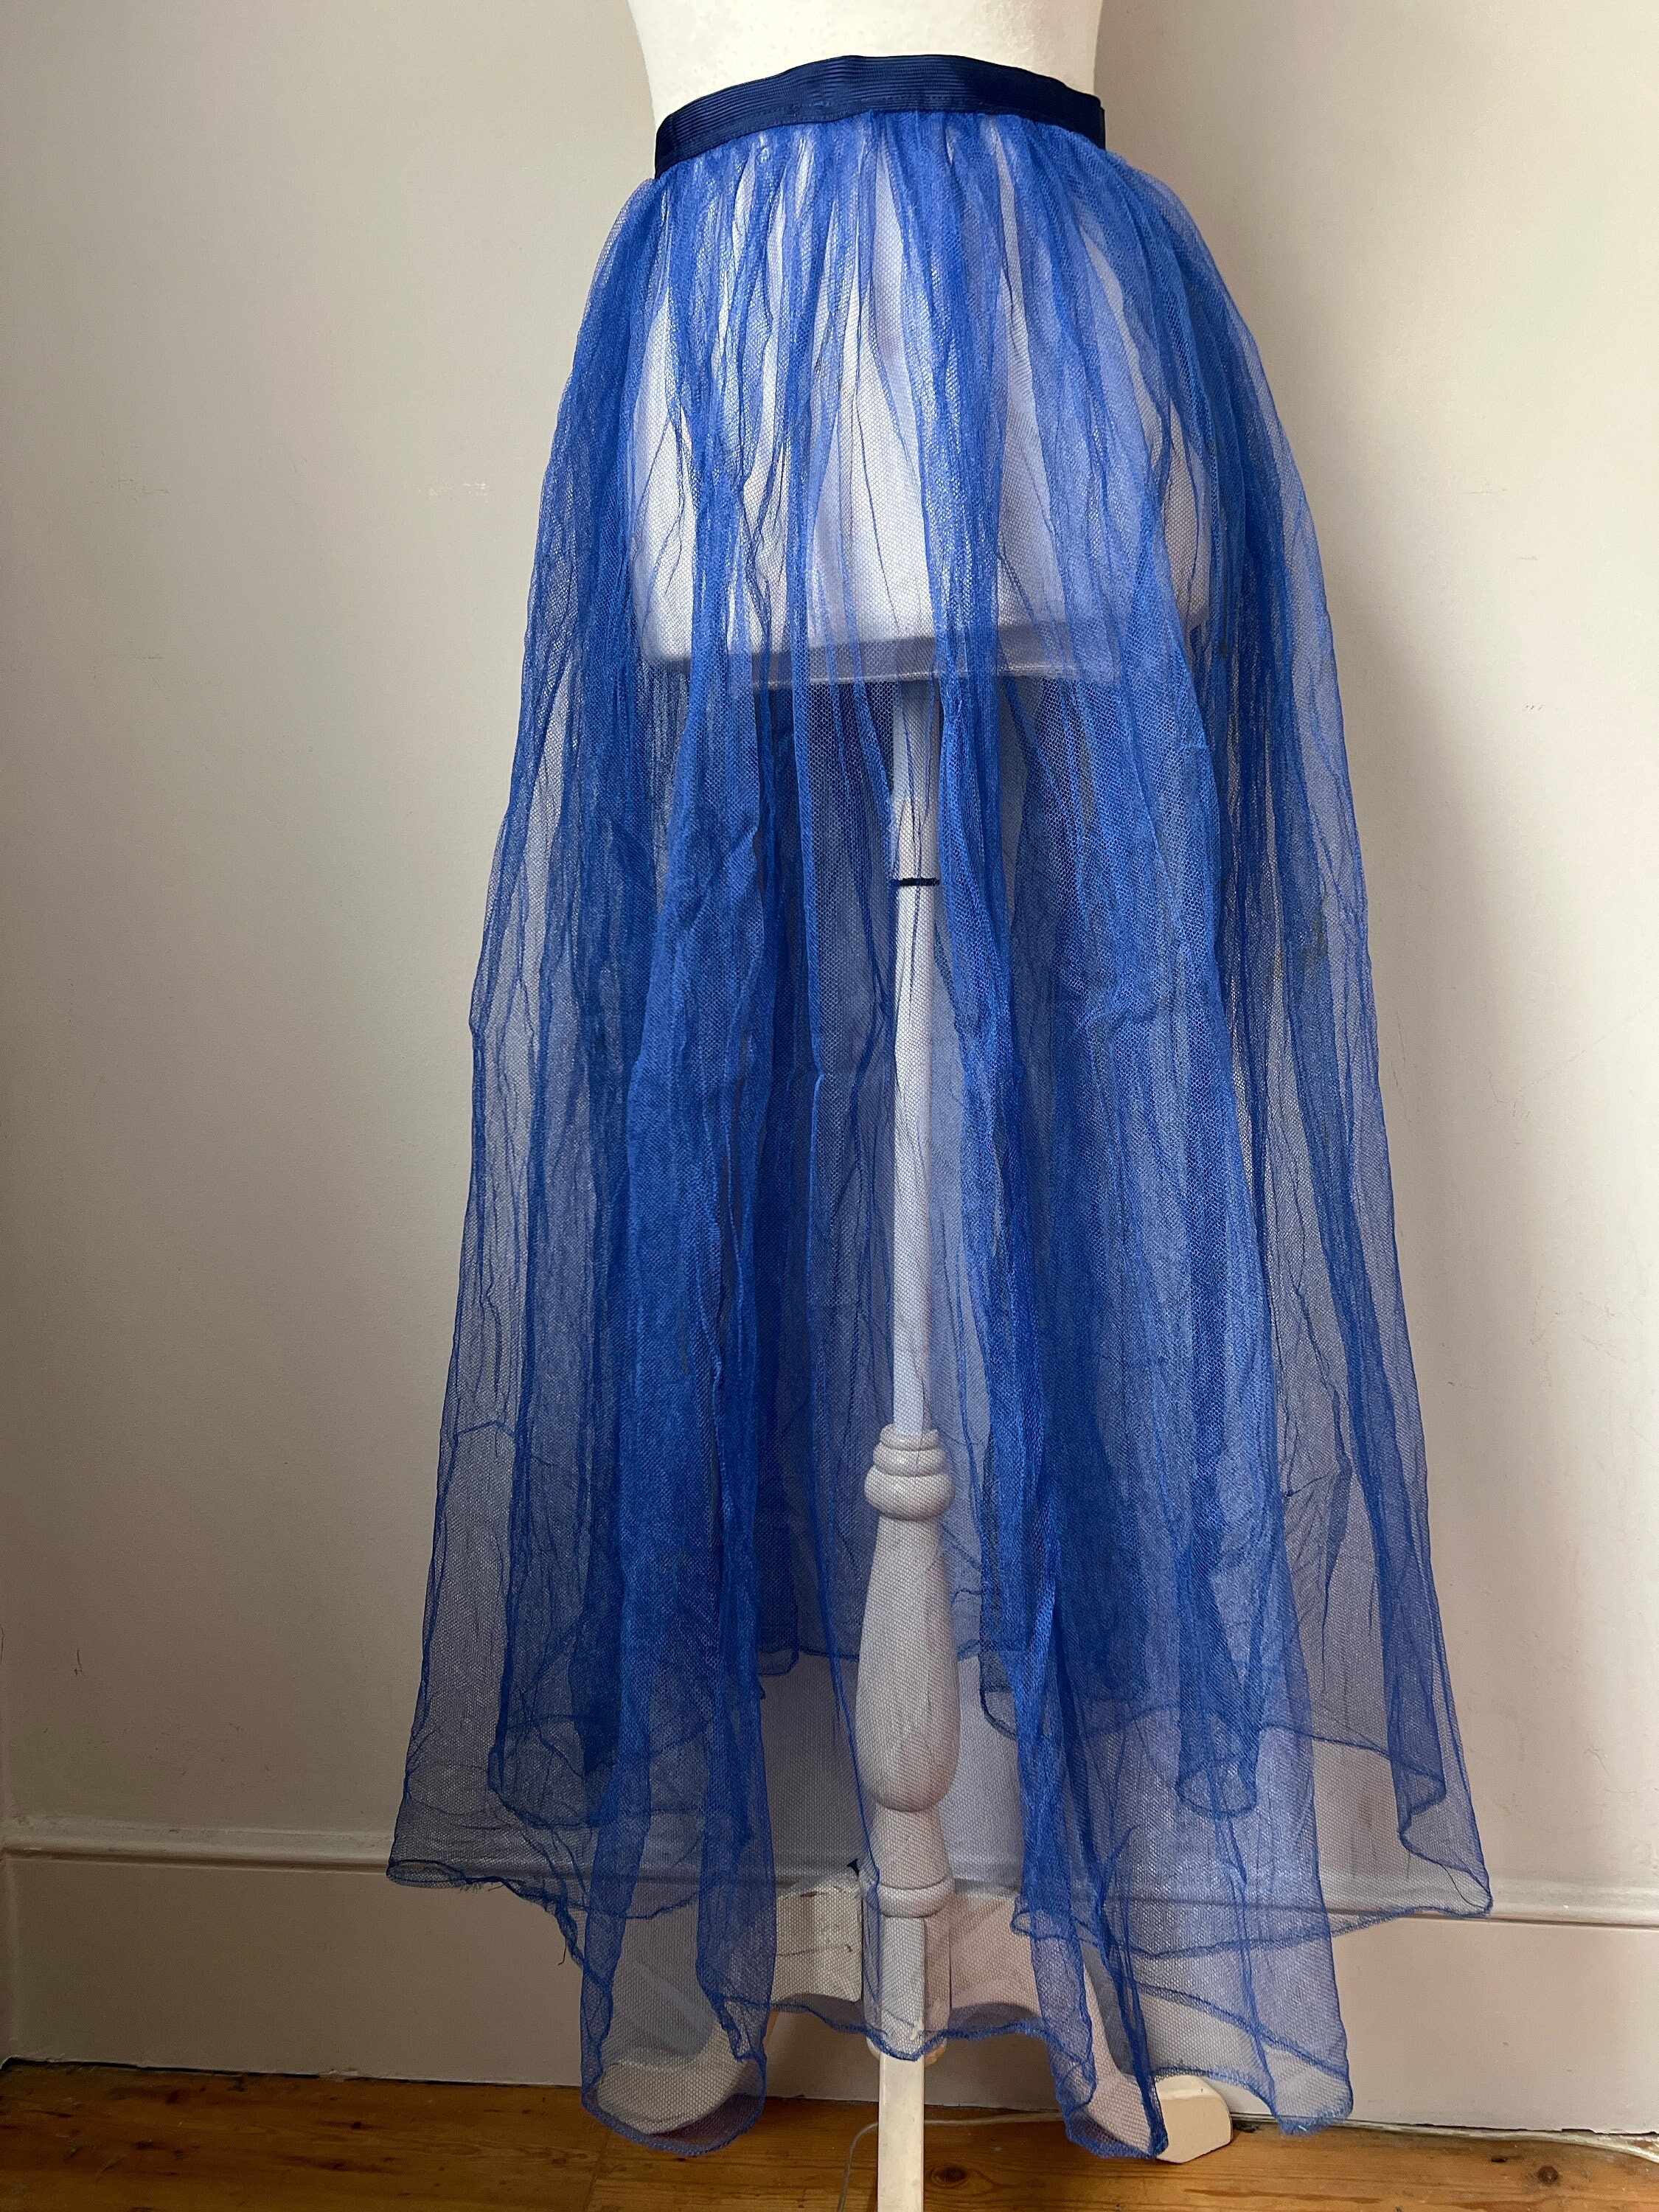 Blue Petticoat for Women, Cotton Straight Women Saree Shapewear